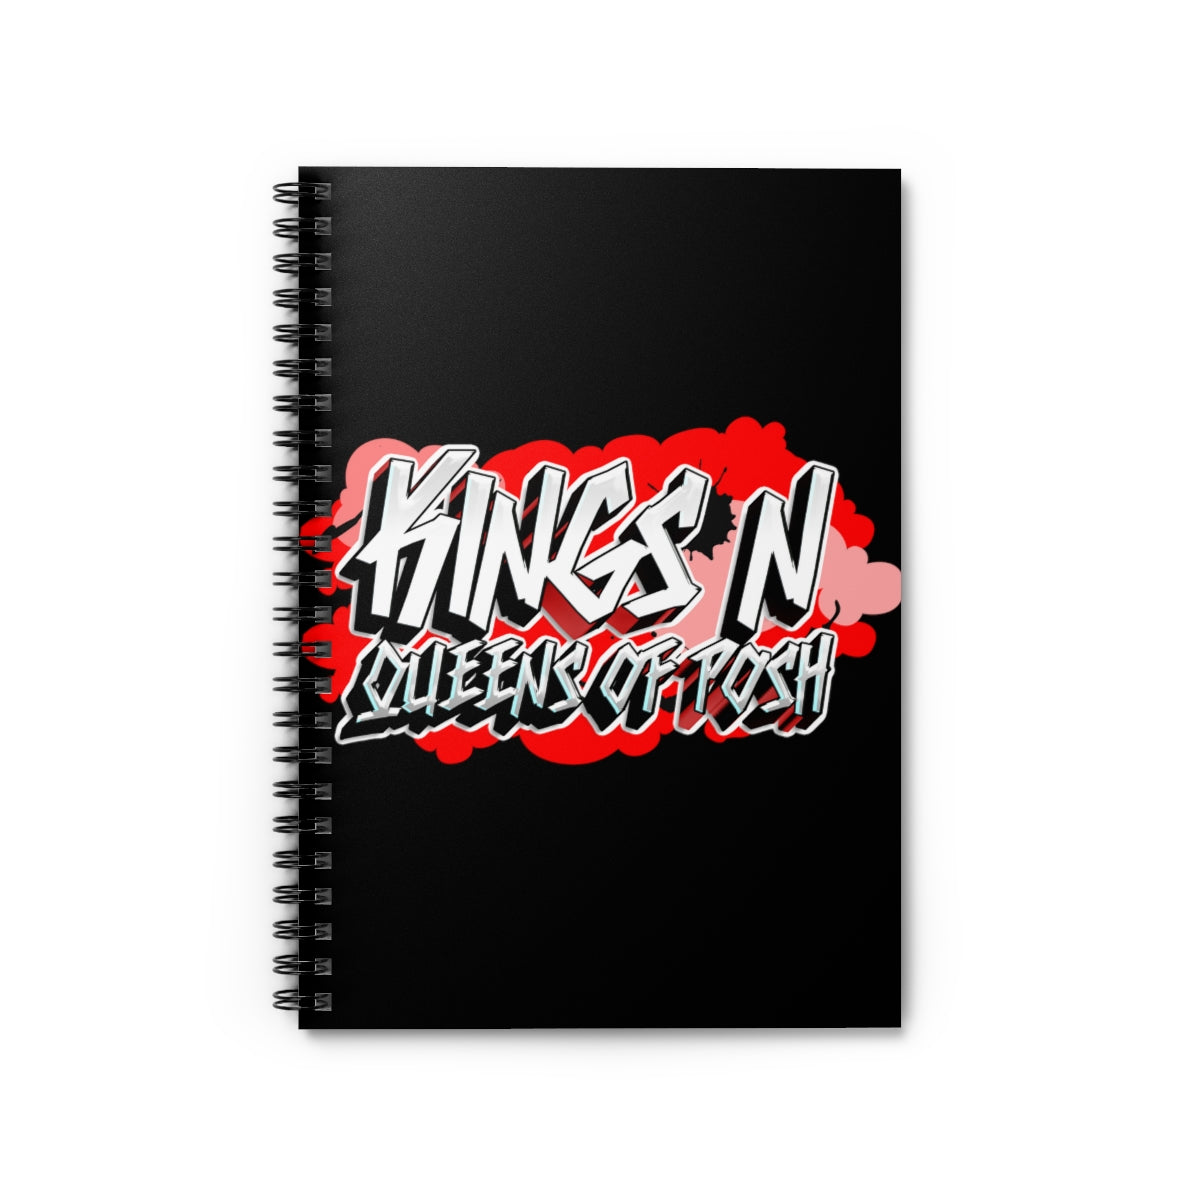 Kings N Queens of Poshh Logo Spiral Notebook - Ruled Line